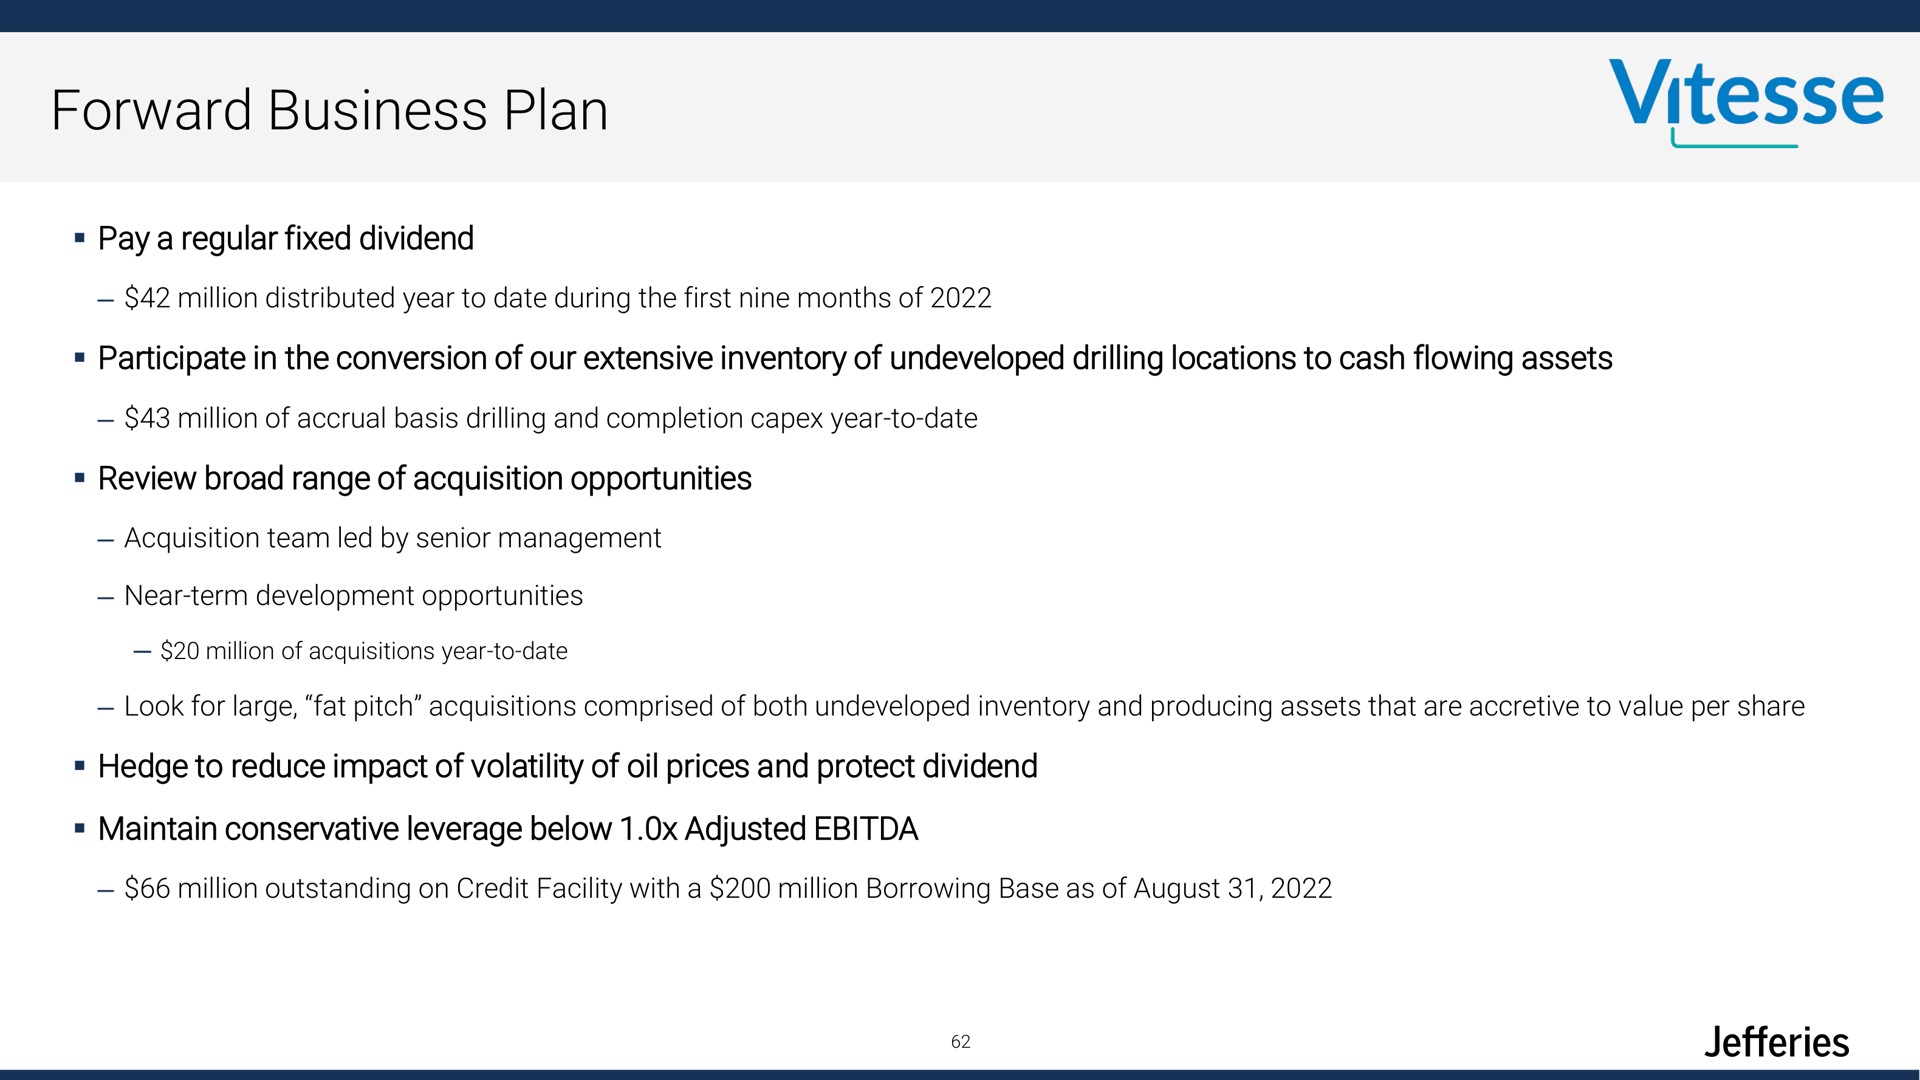 forward business plan a | Jefferies Financial Group